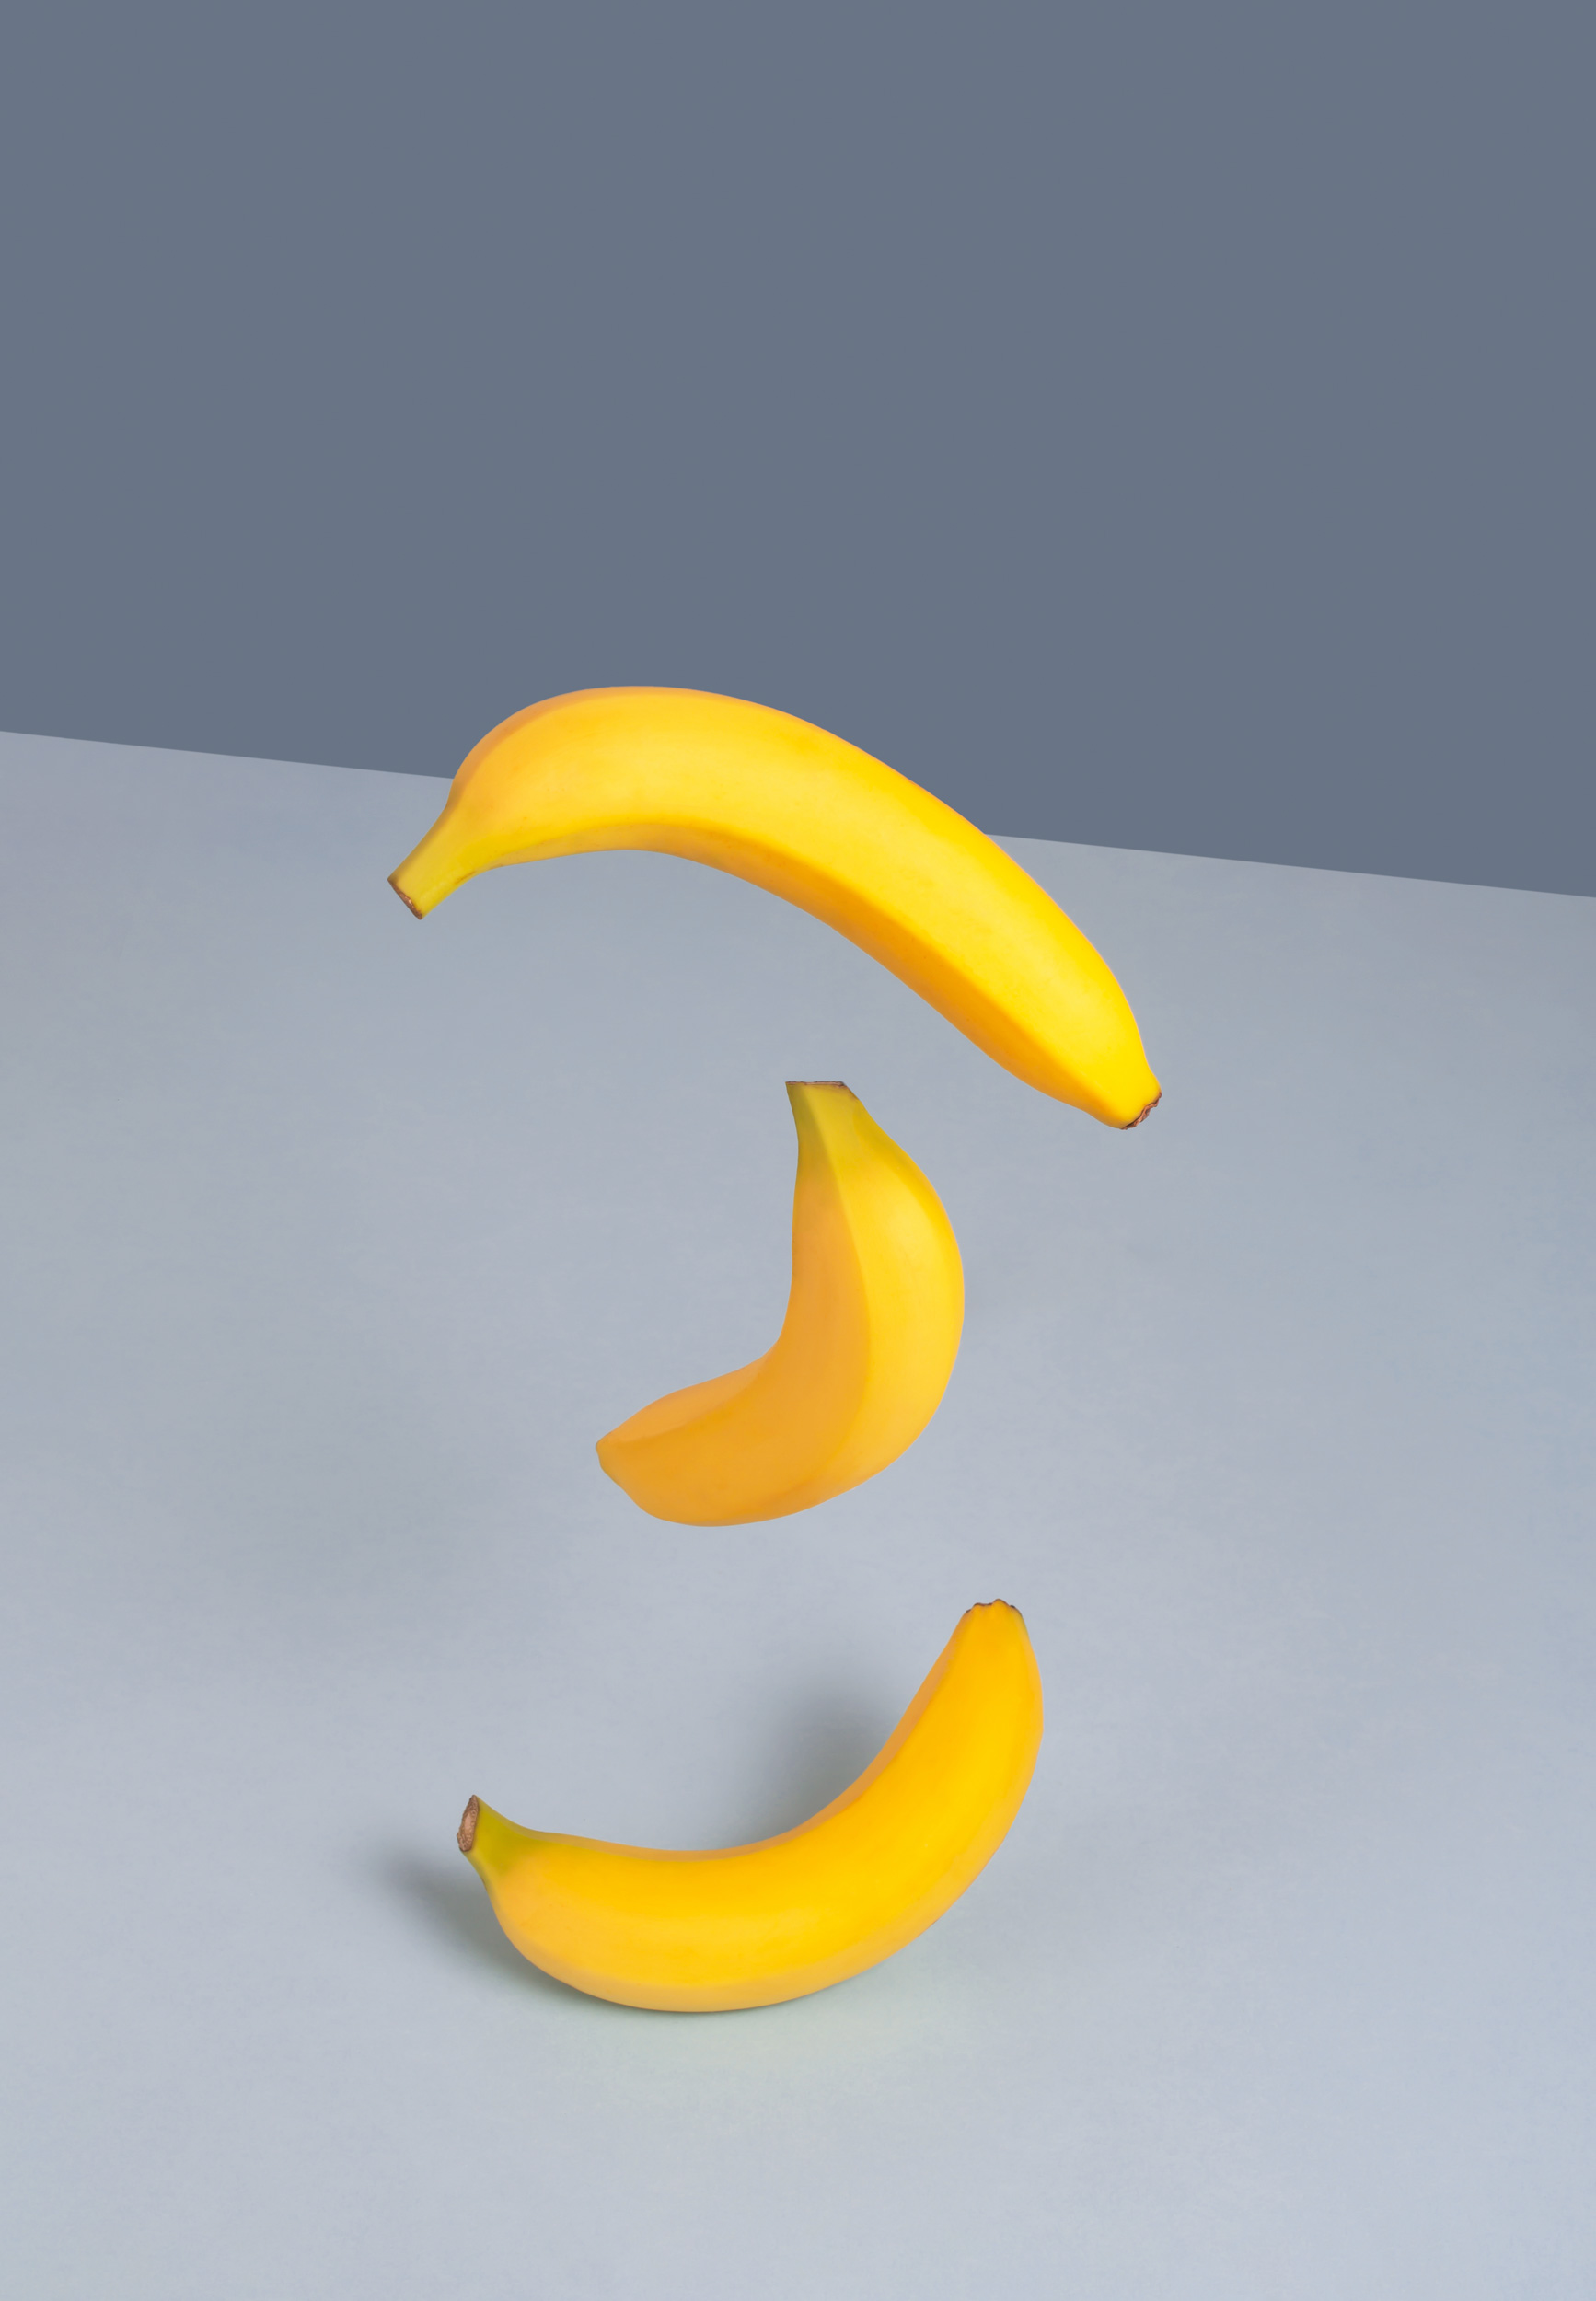 yellow-bananas-on-a-blue-background-minimalistic-2021-08-30-00-04-41-utc.jpg